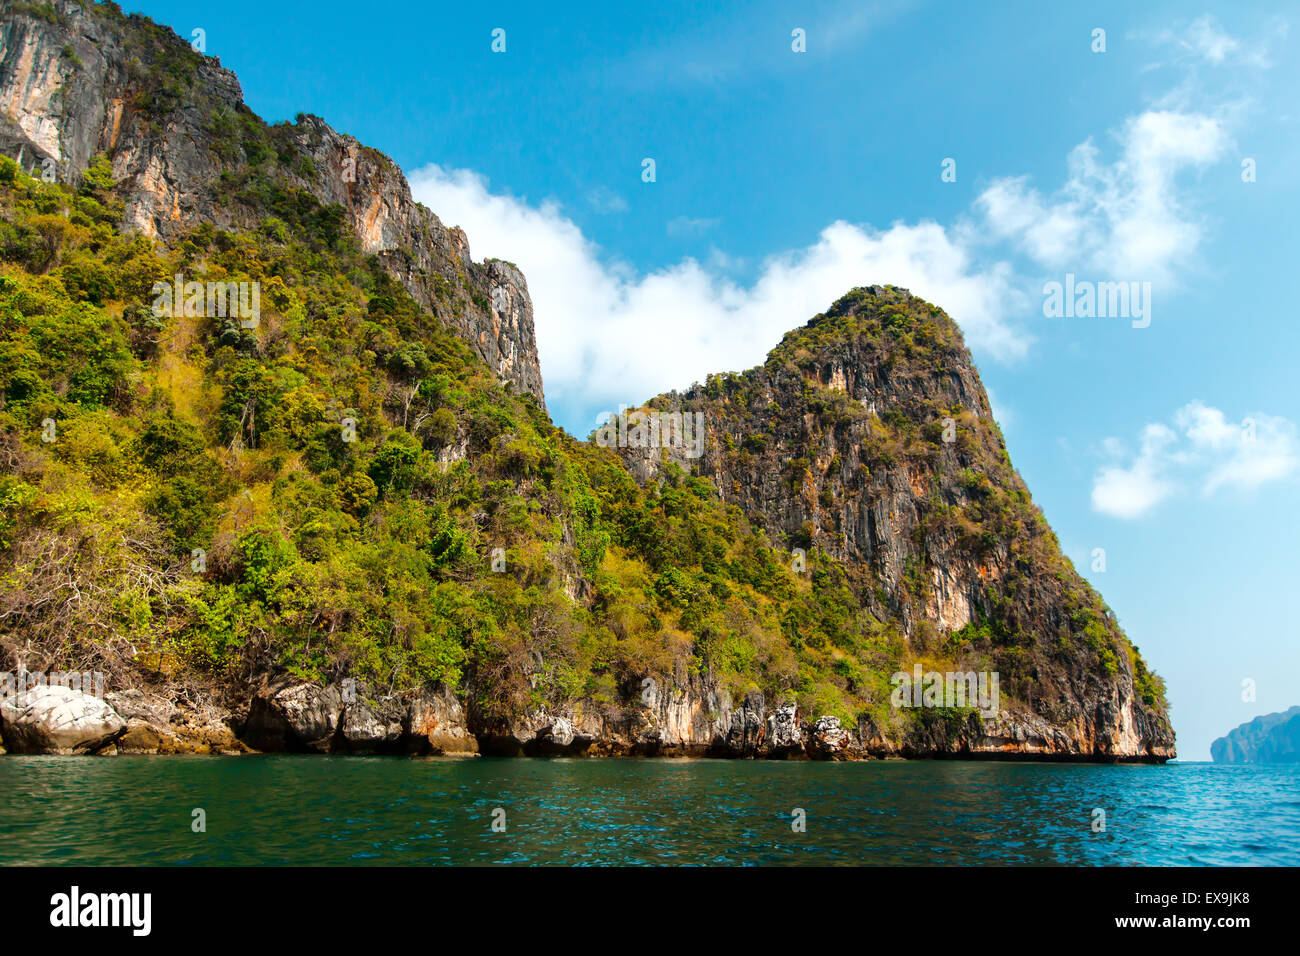 Rock-Tropeninsel mit grünen Steinen am tiefblauen Meer Philippinen Boracay Sommerinsel Stockfoto